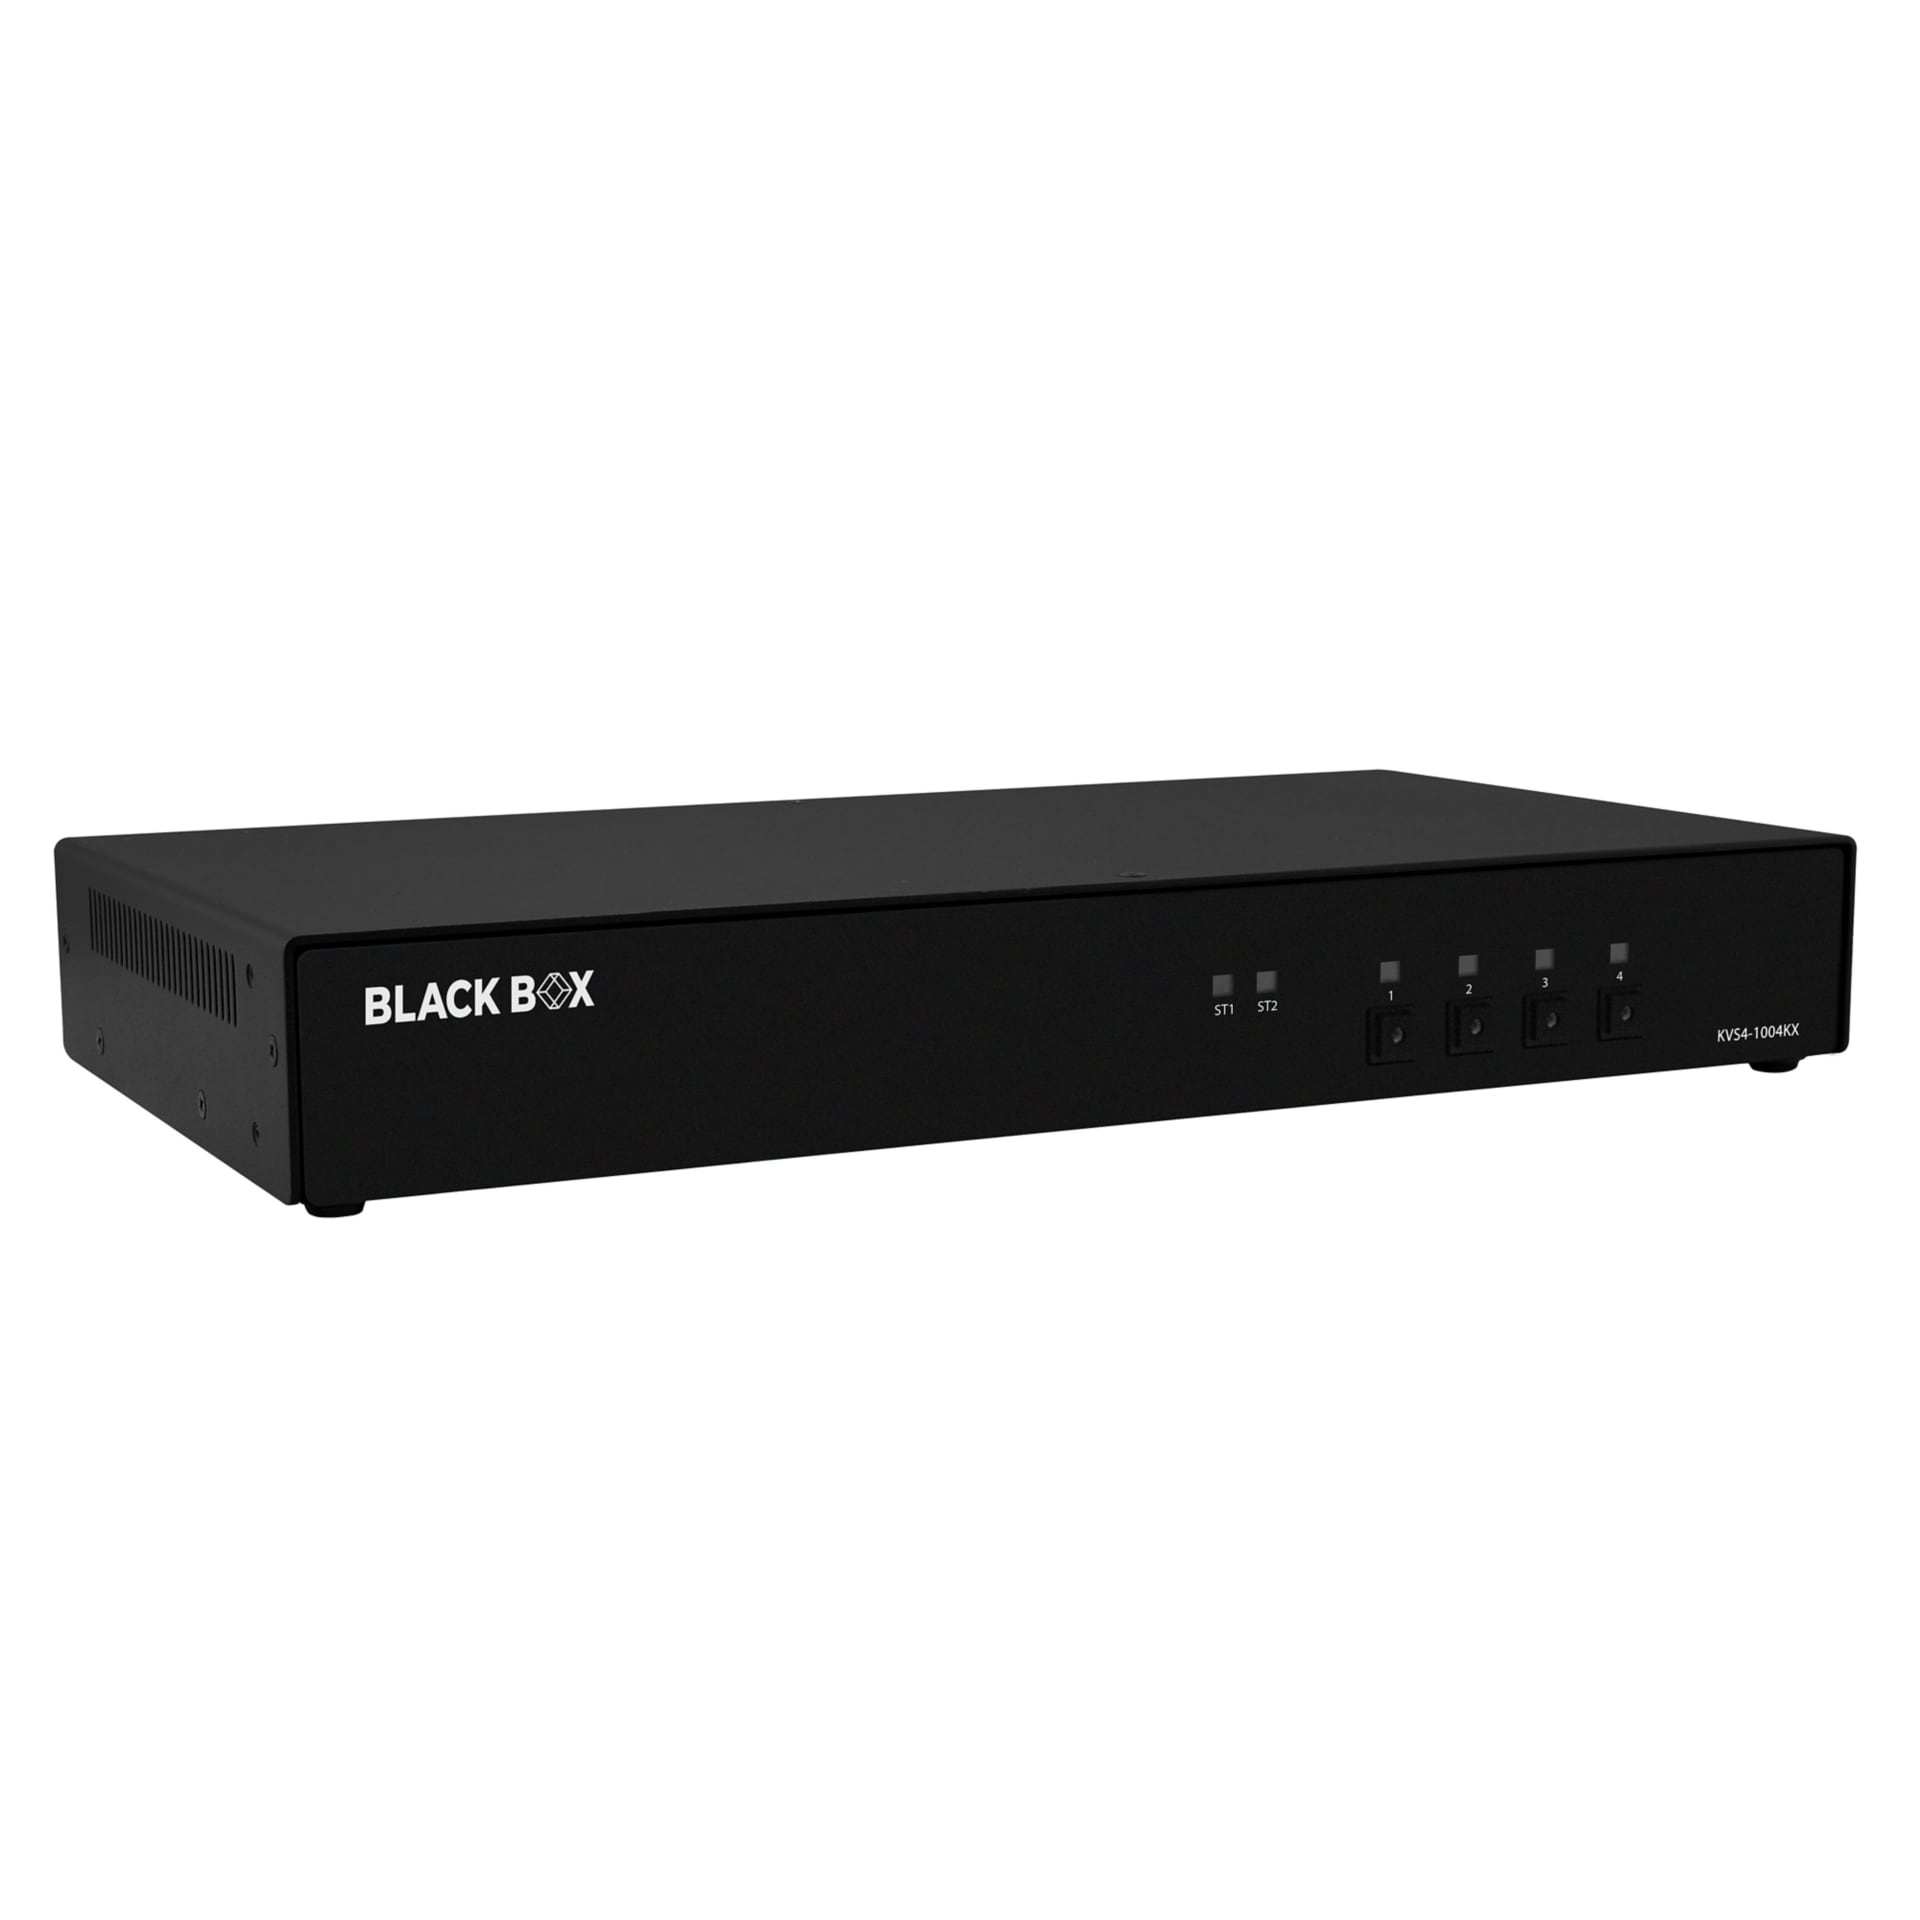 Black Box Secure KM Switch, NIAP 4.0 - 4-Port, CAC